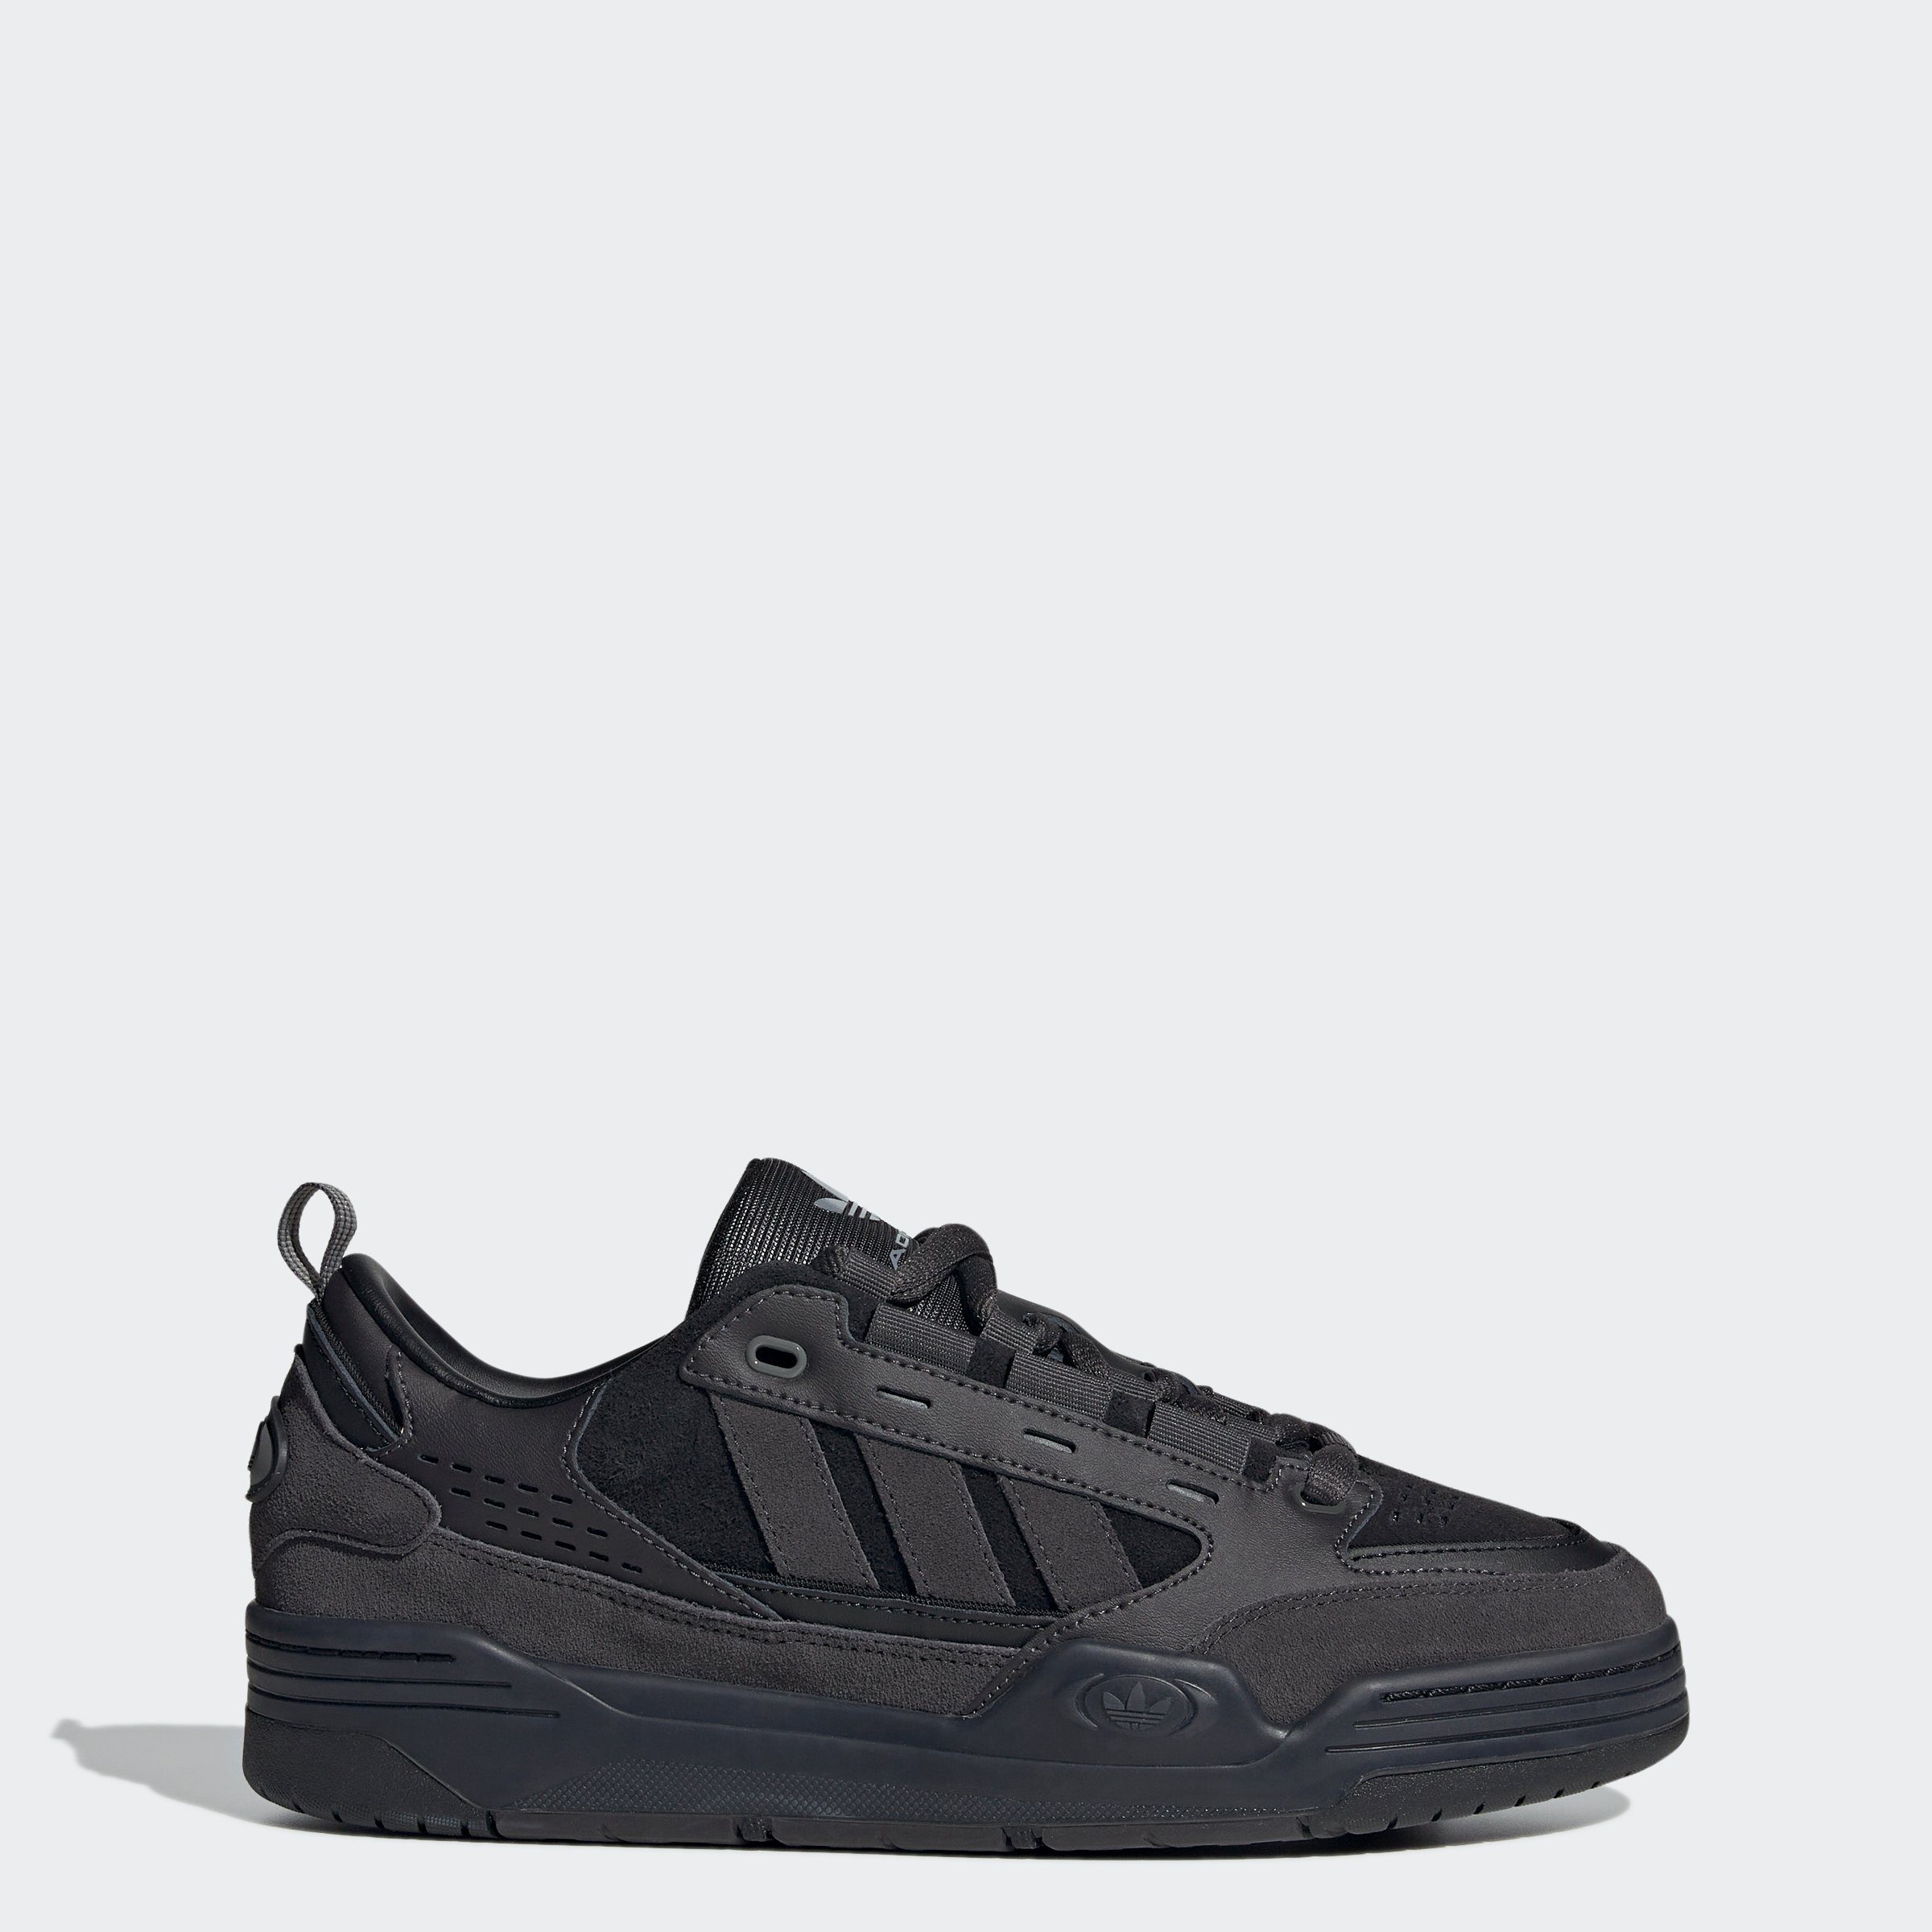 adidas / Black Black Black Originals Core Utility / Utility Sneaker ADI2000